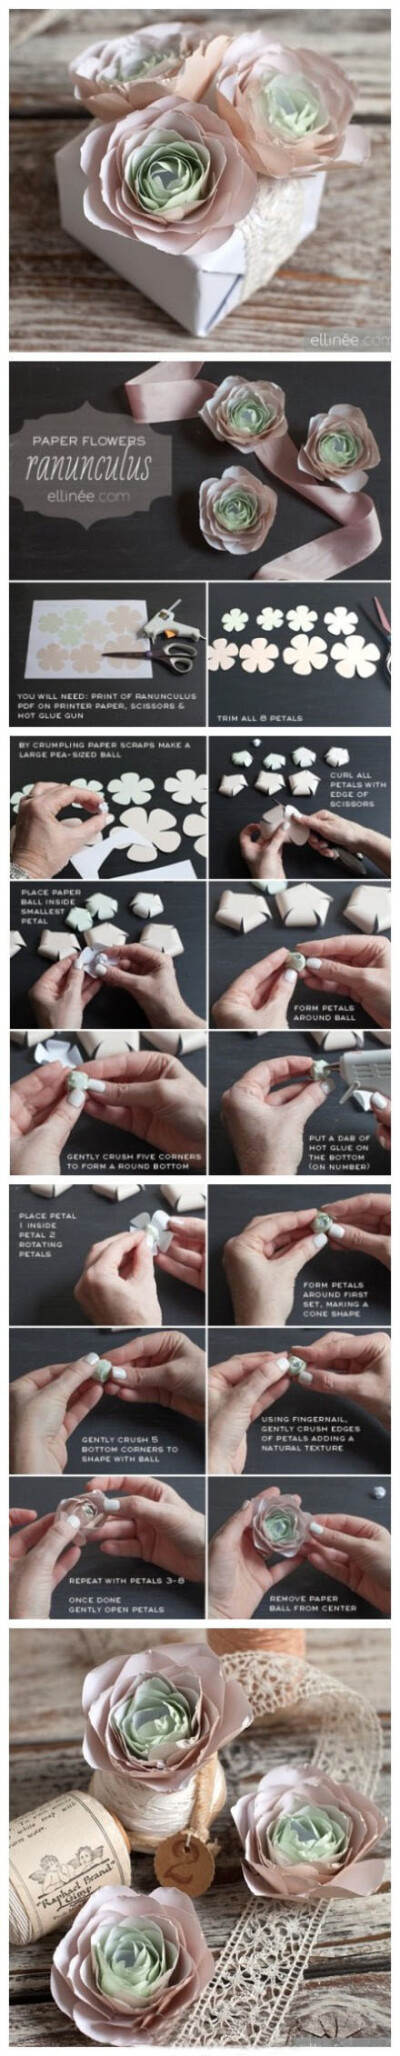 DIY礼品包装纸花教程